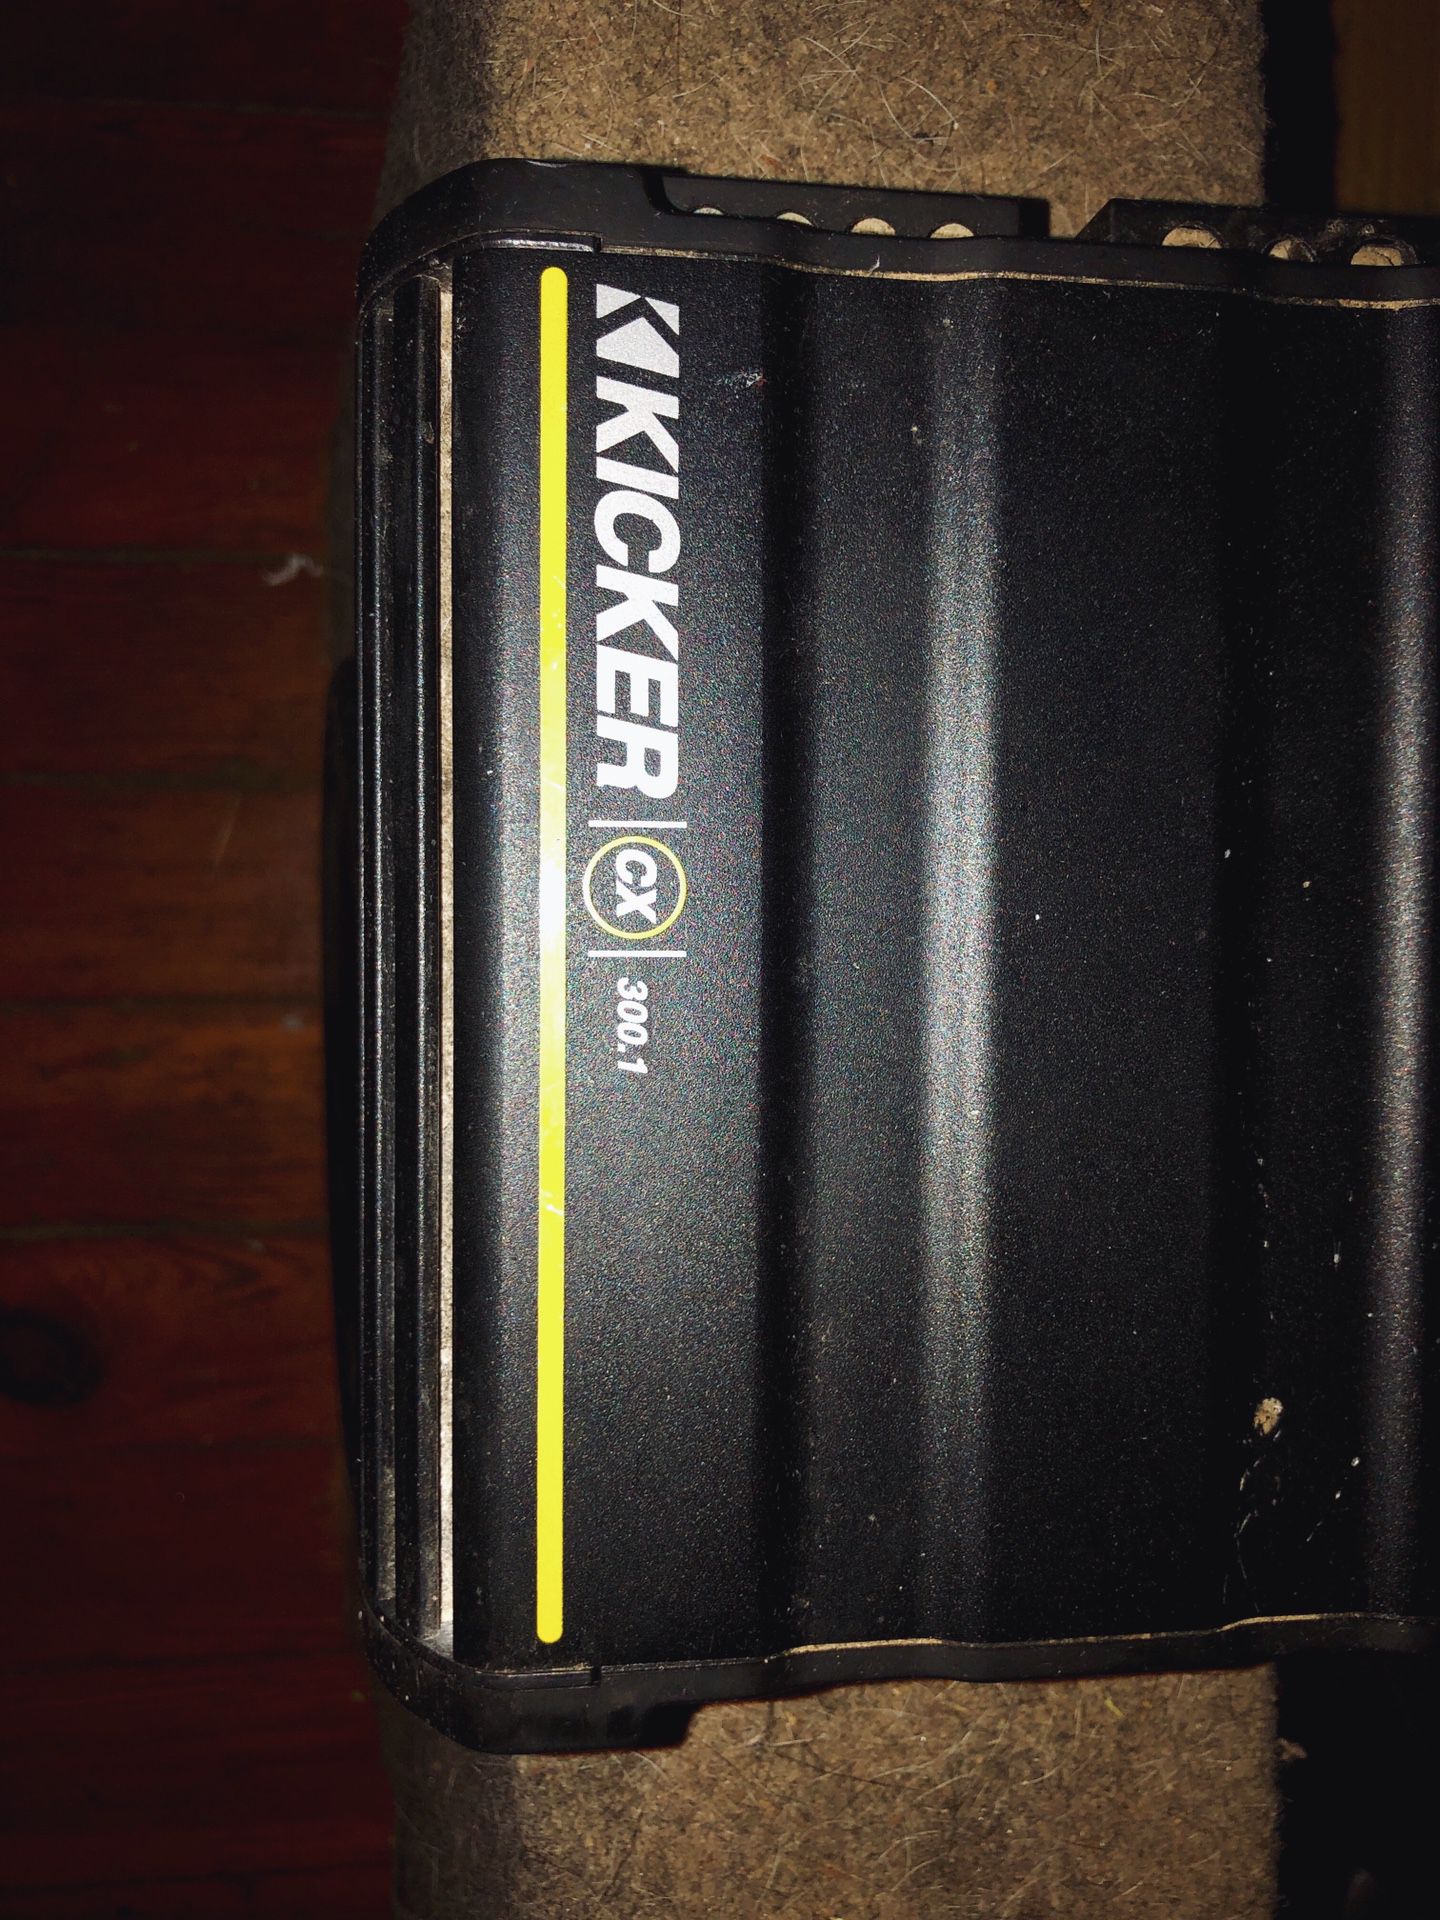 300W Kicker CX Monoblock Amp